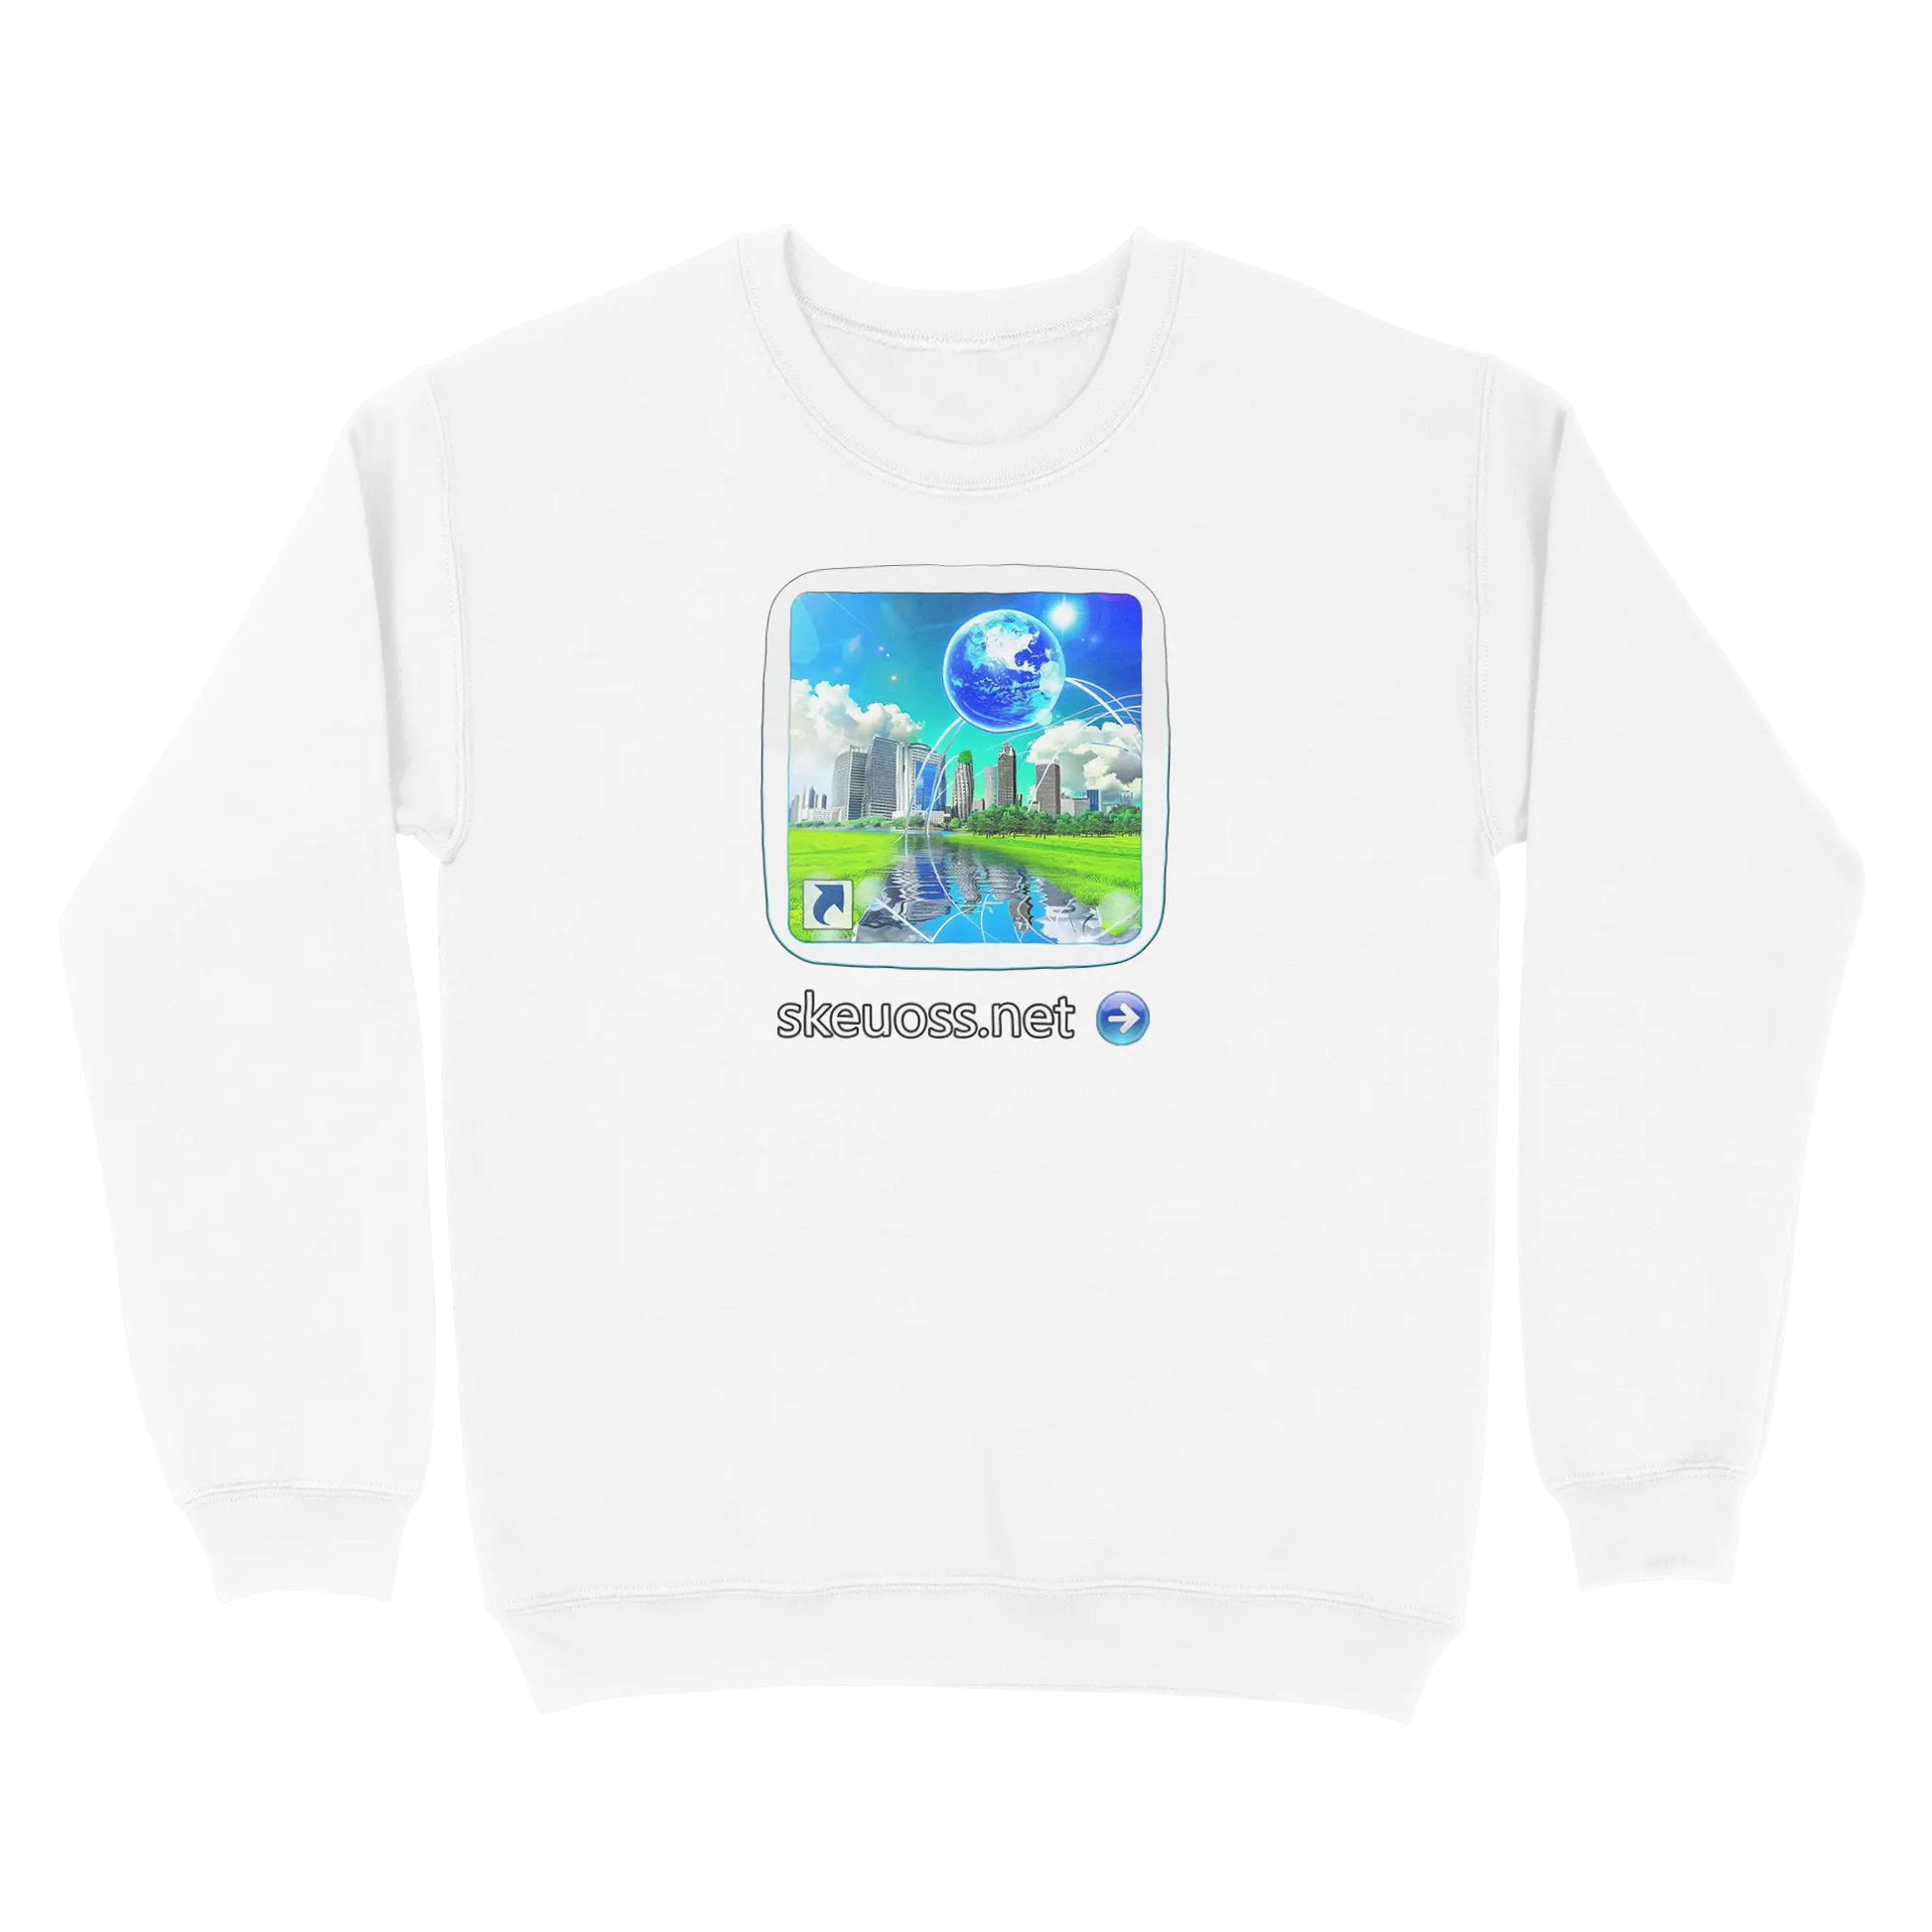 Frutiger Aero Sweatshirt - User Login Collection - User 393